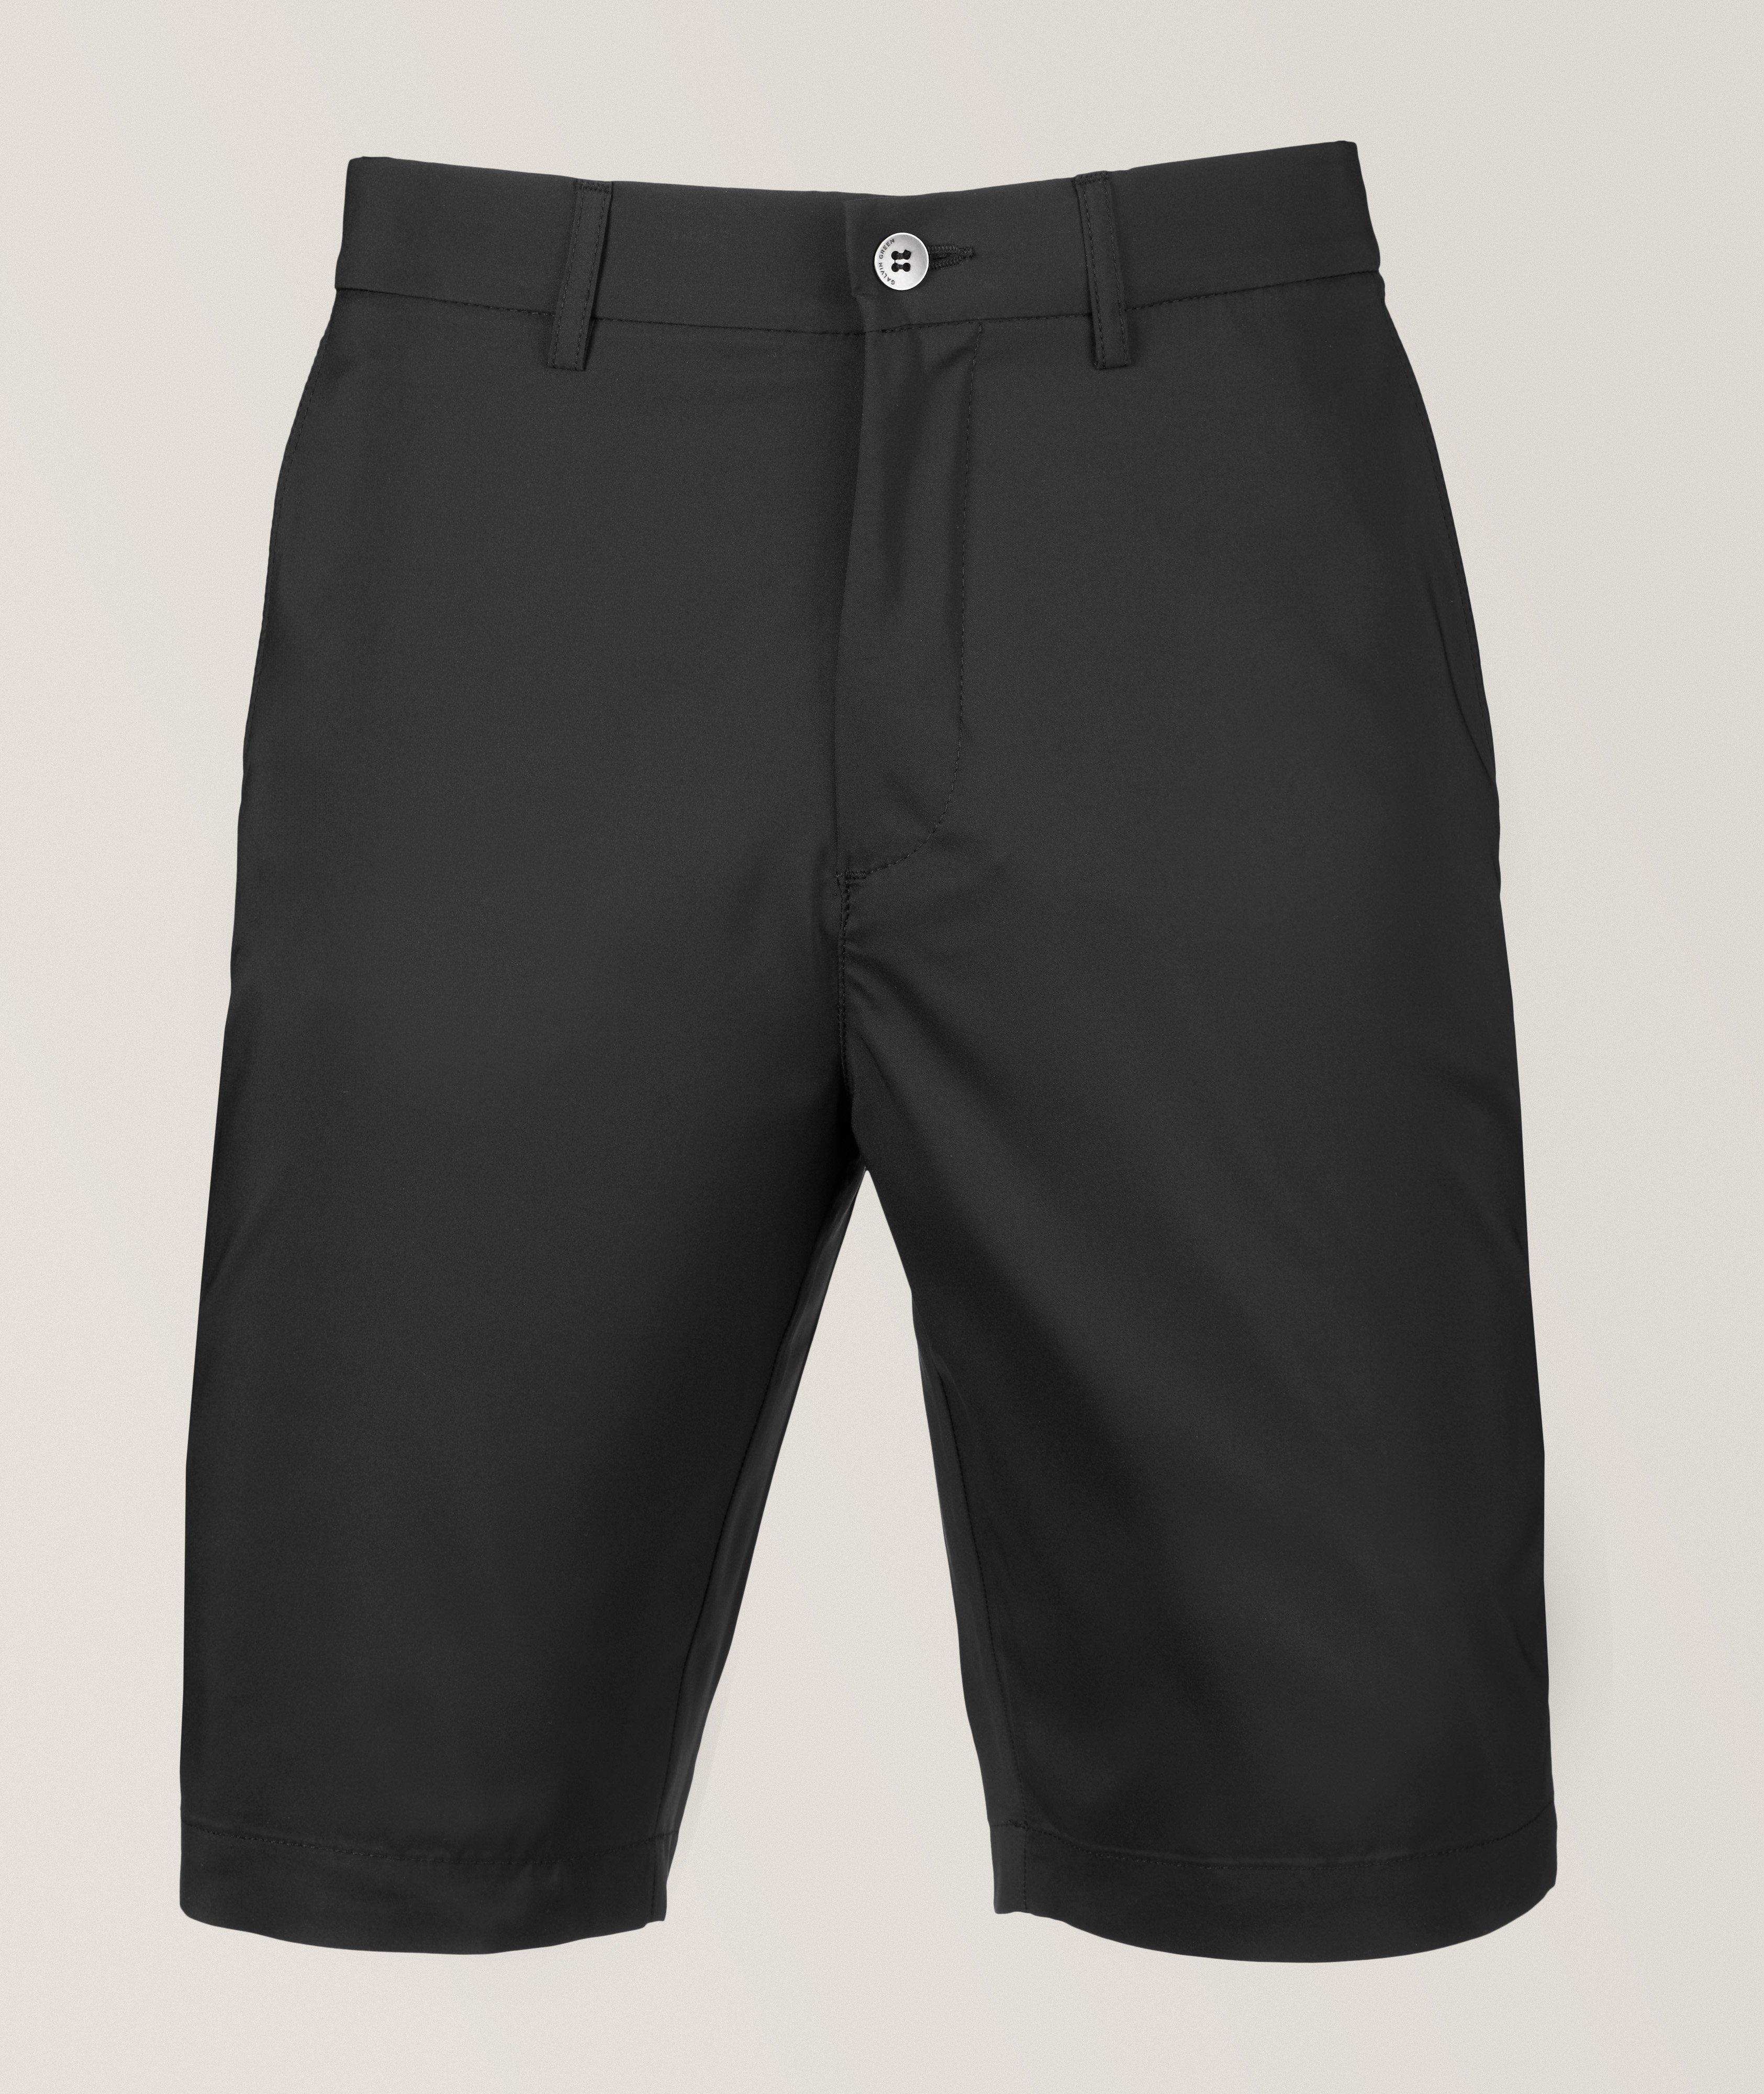 Percy Golf Shorts